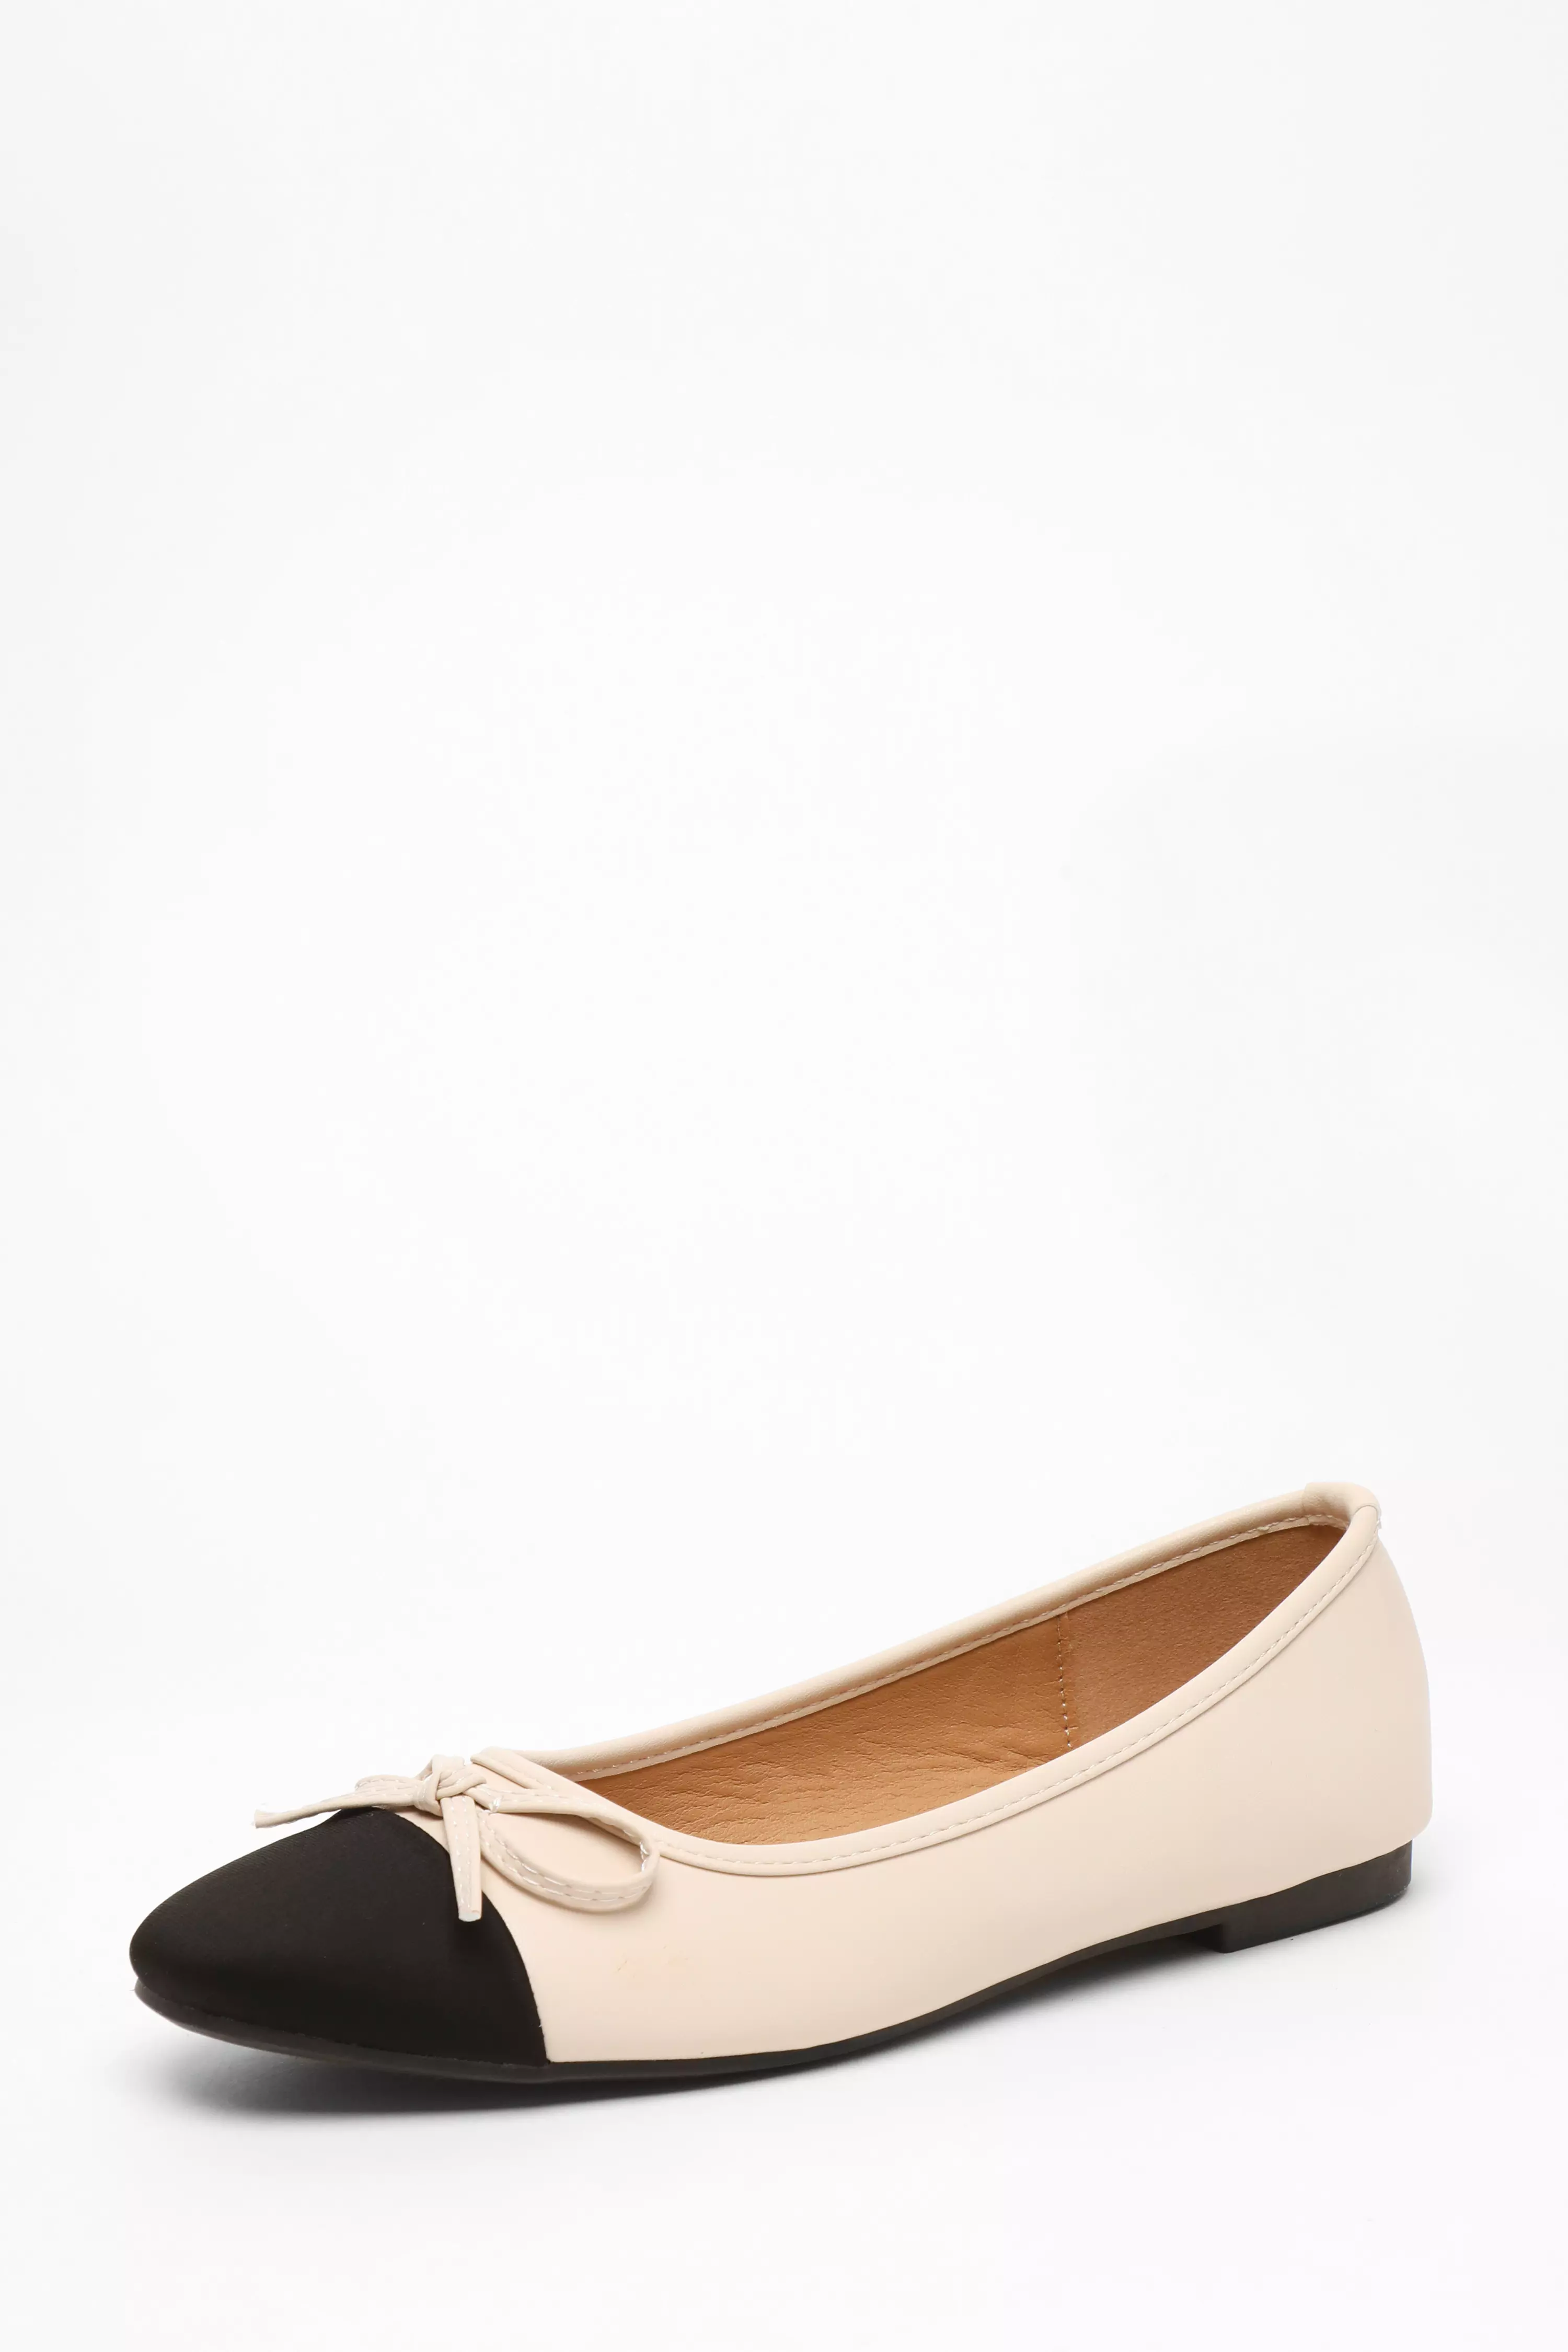 Flat Shoes for Women | Casual & Dressy Flats | QUIZ